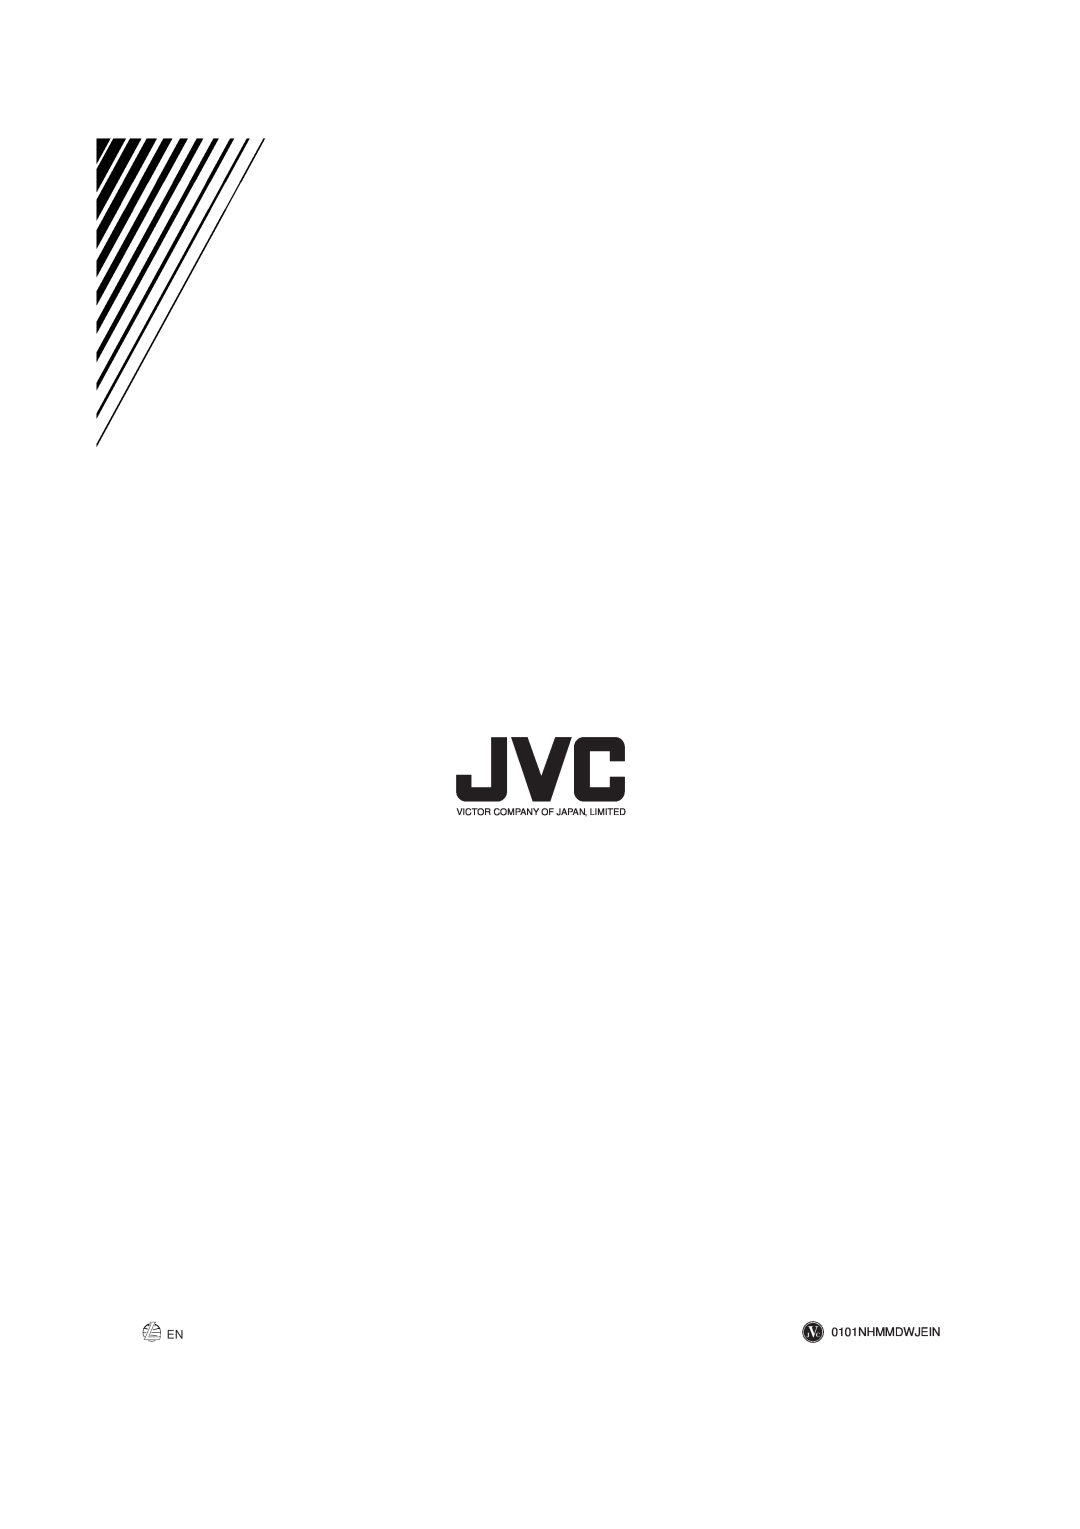 JVC RX-7010VBK manual 0101NHMMDWJEIN, Victor Company Of Japan, Limited 